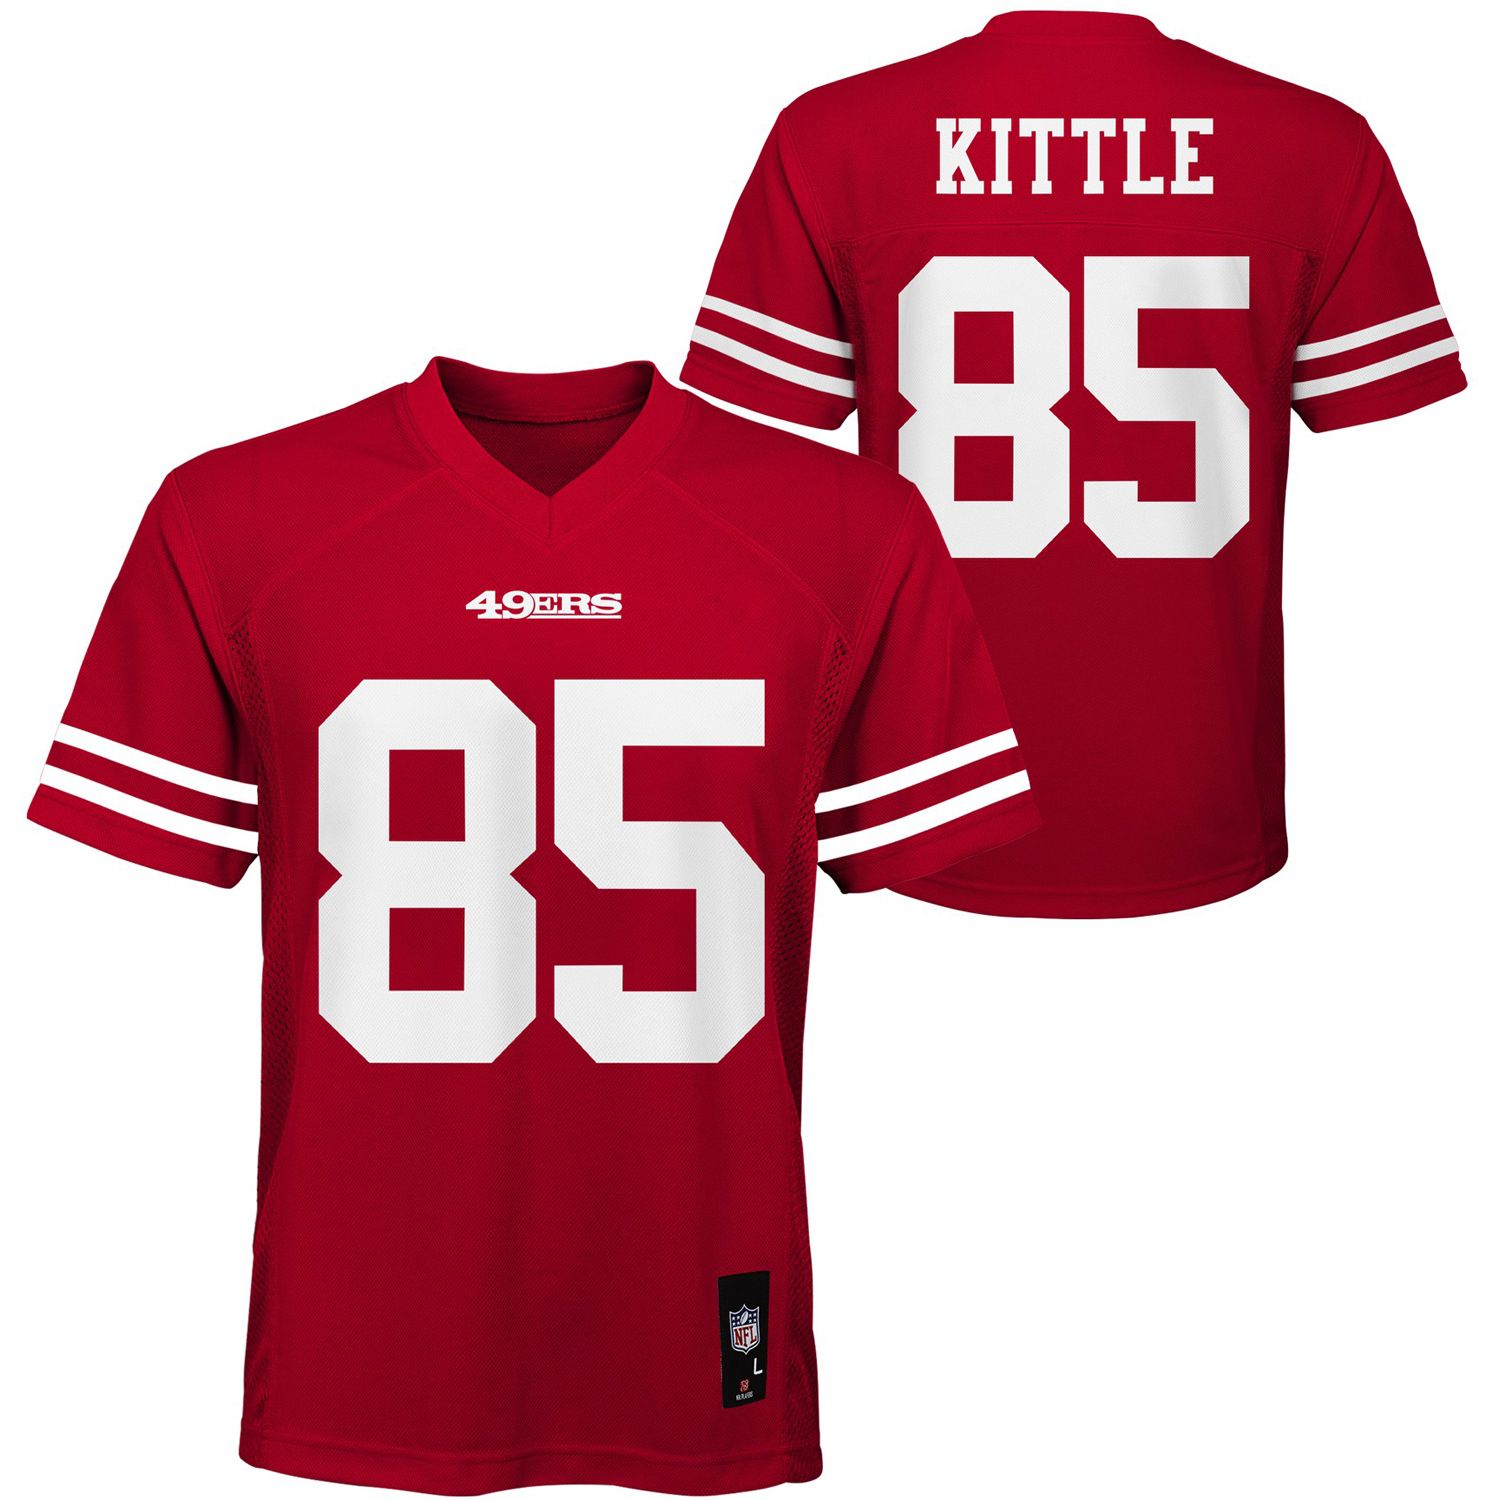 sf 49ers kittle jersey